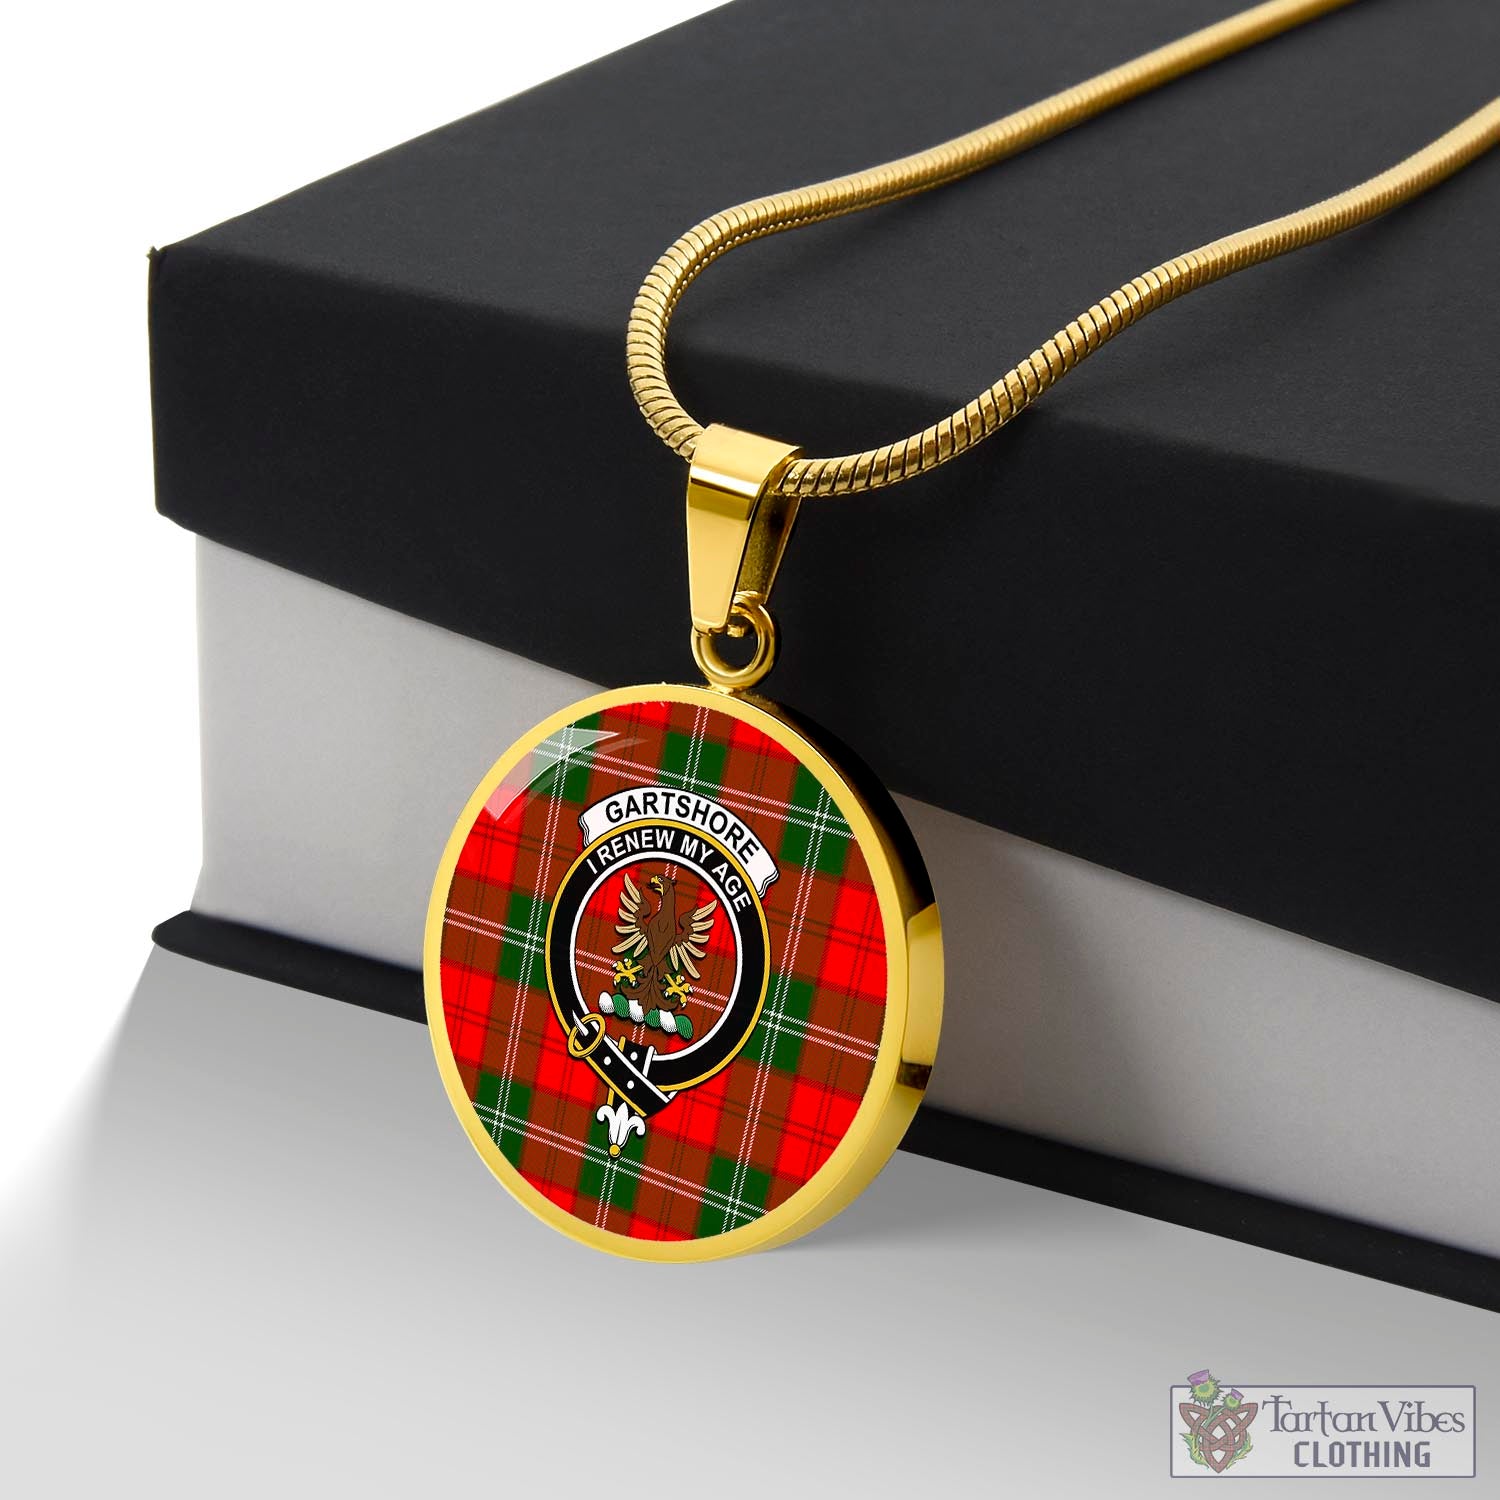 Tartan Vibes Clothing Gartshore Tartan Circle Necklace with Family Crest